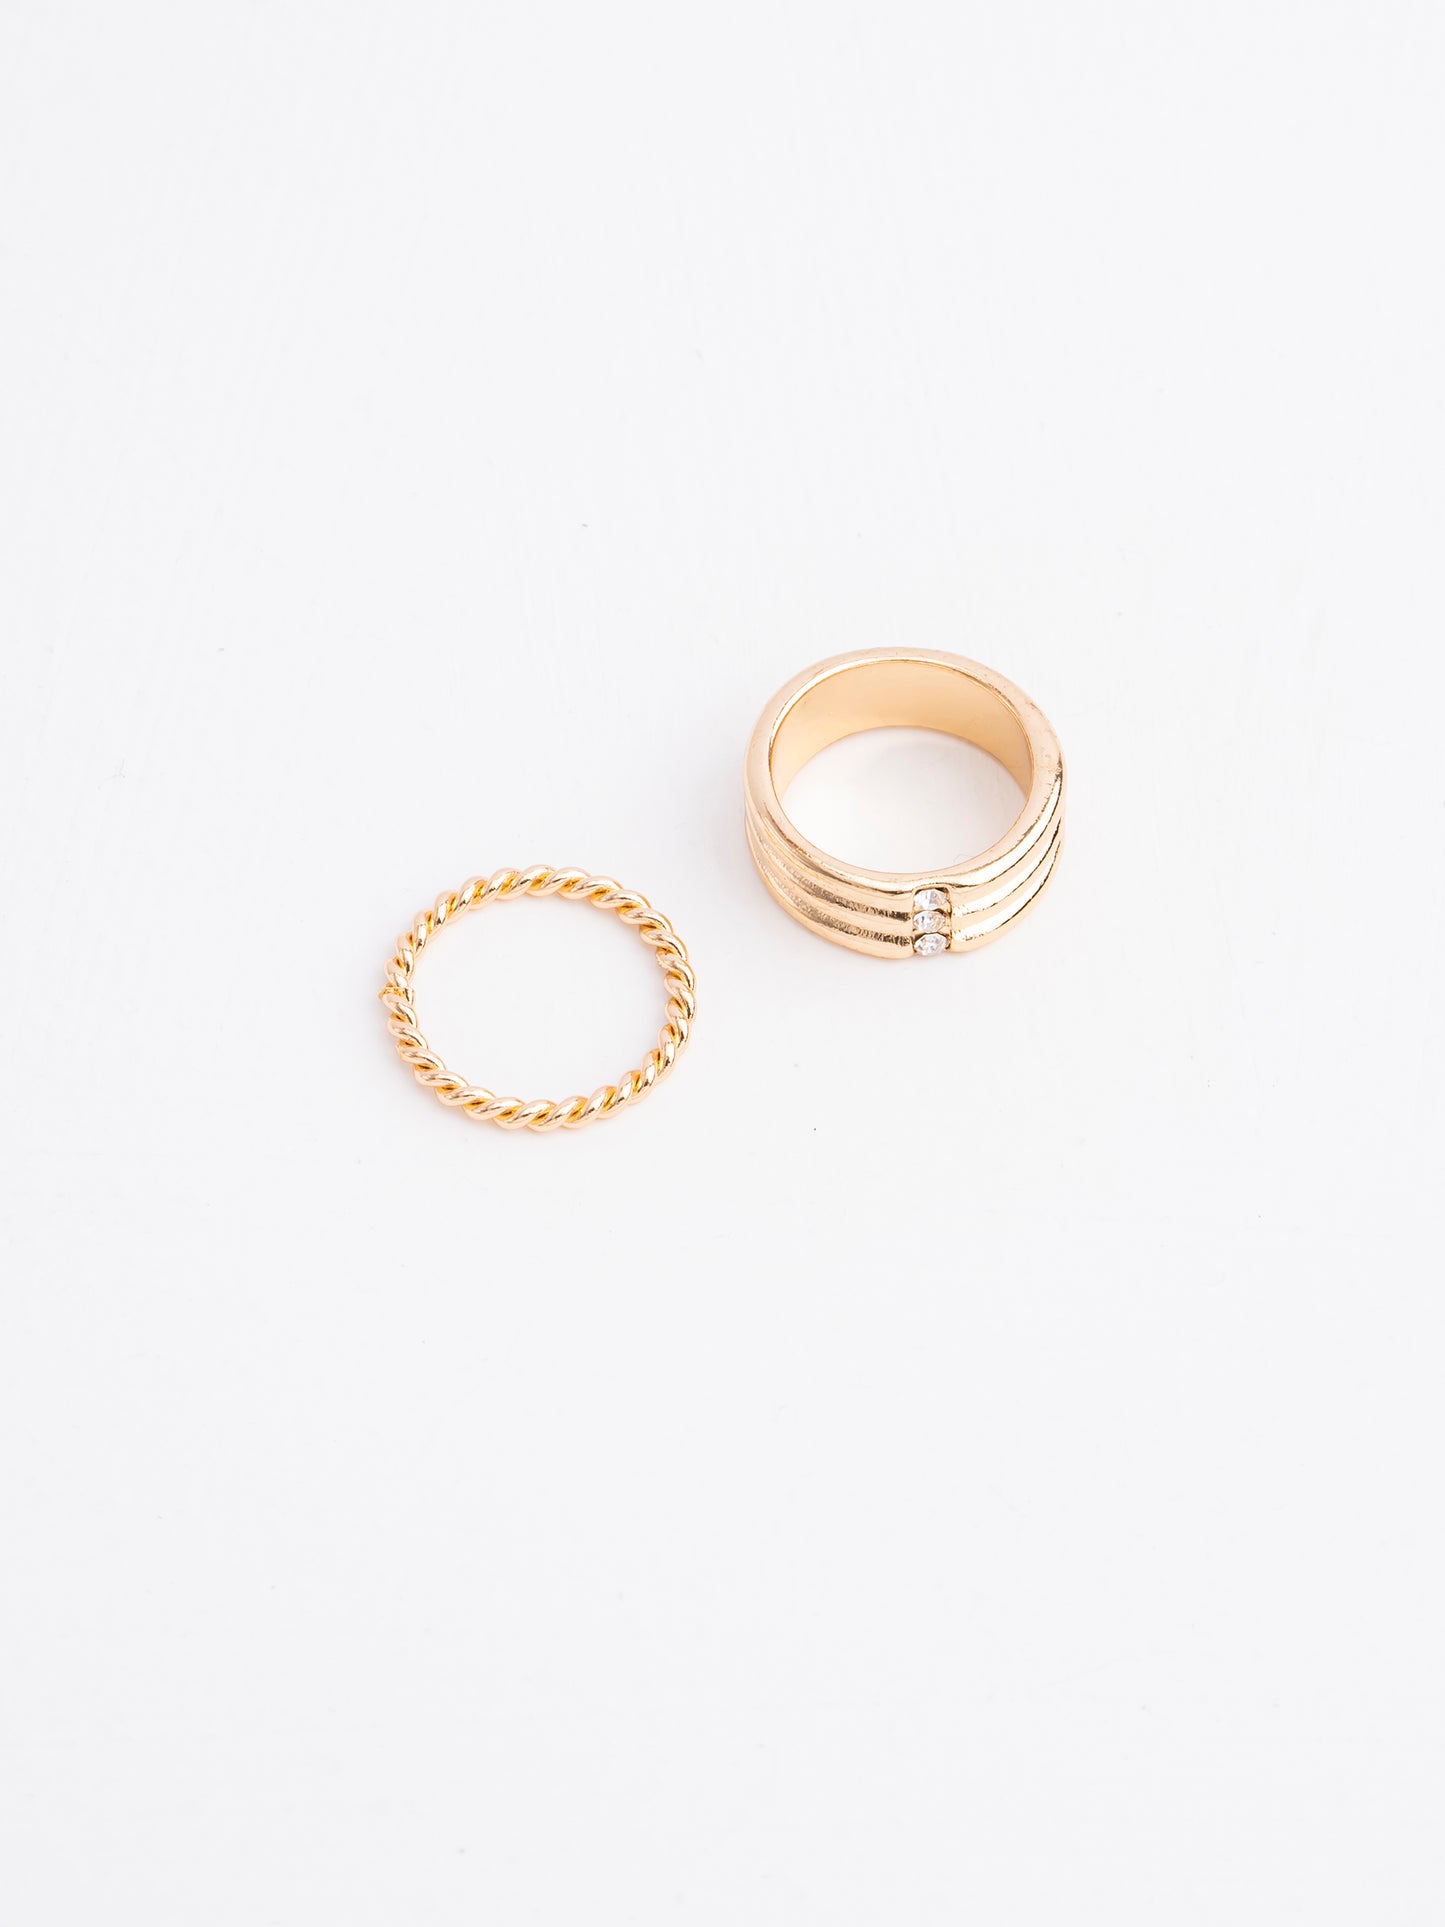 Antique Gold Ring Set